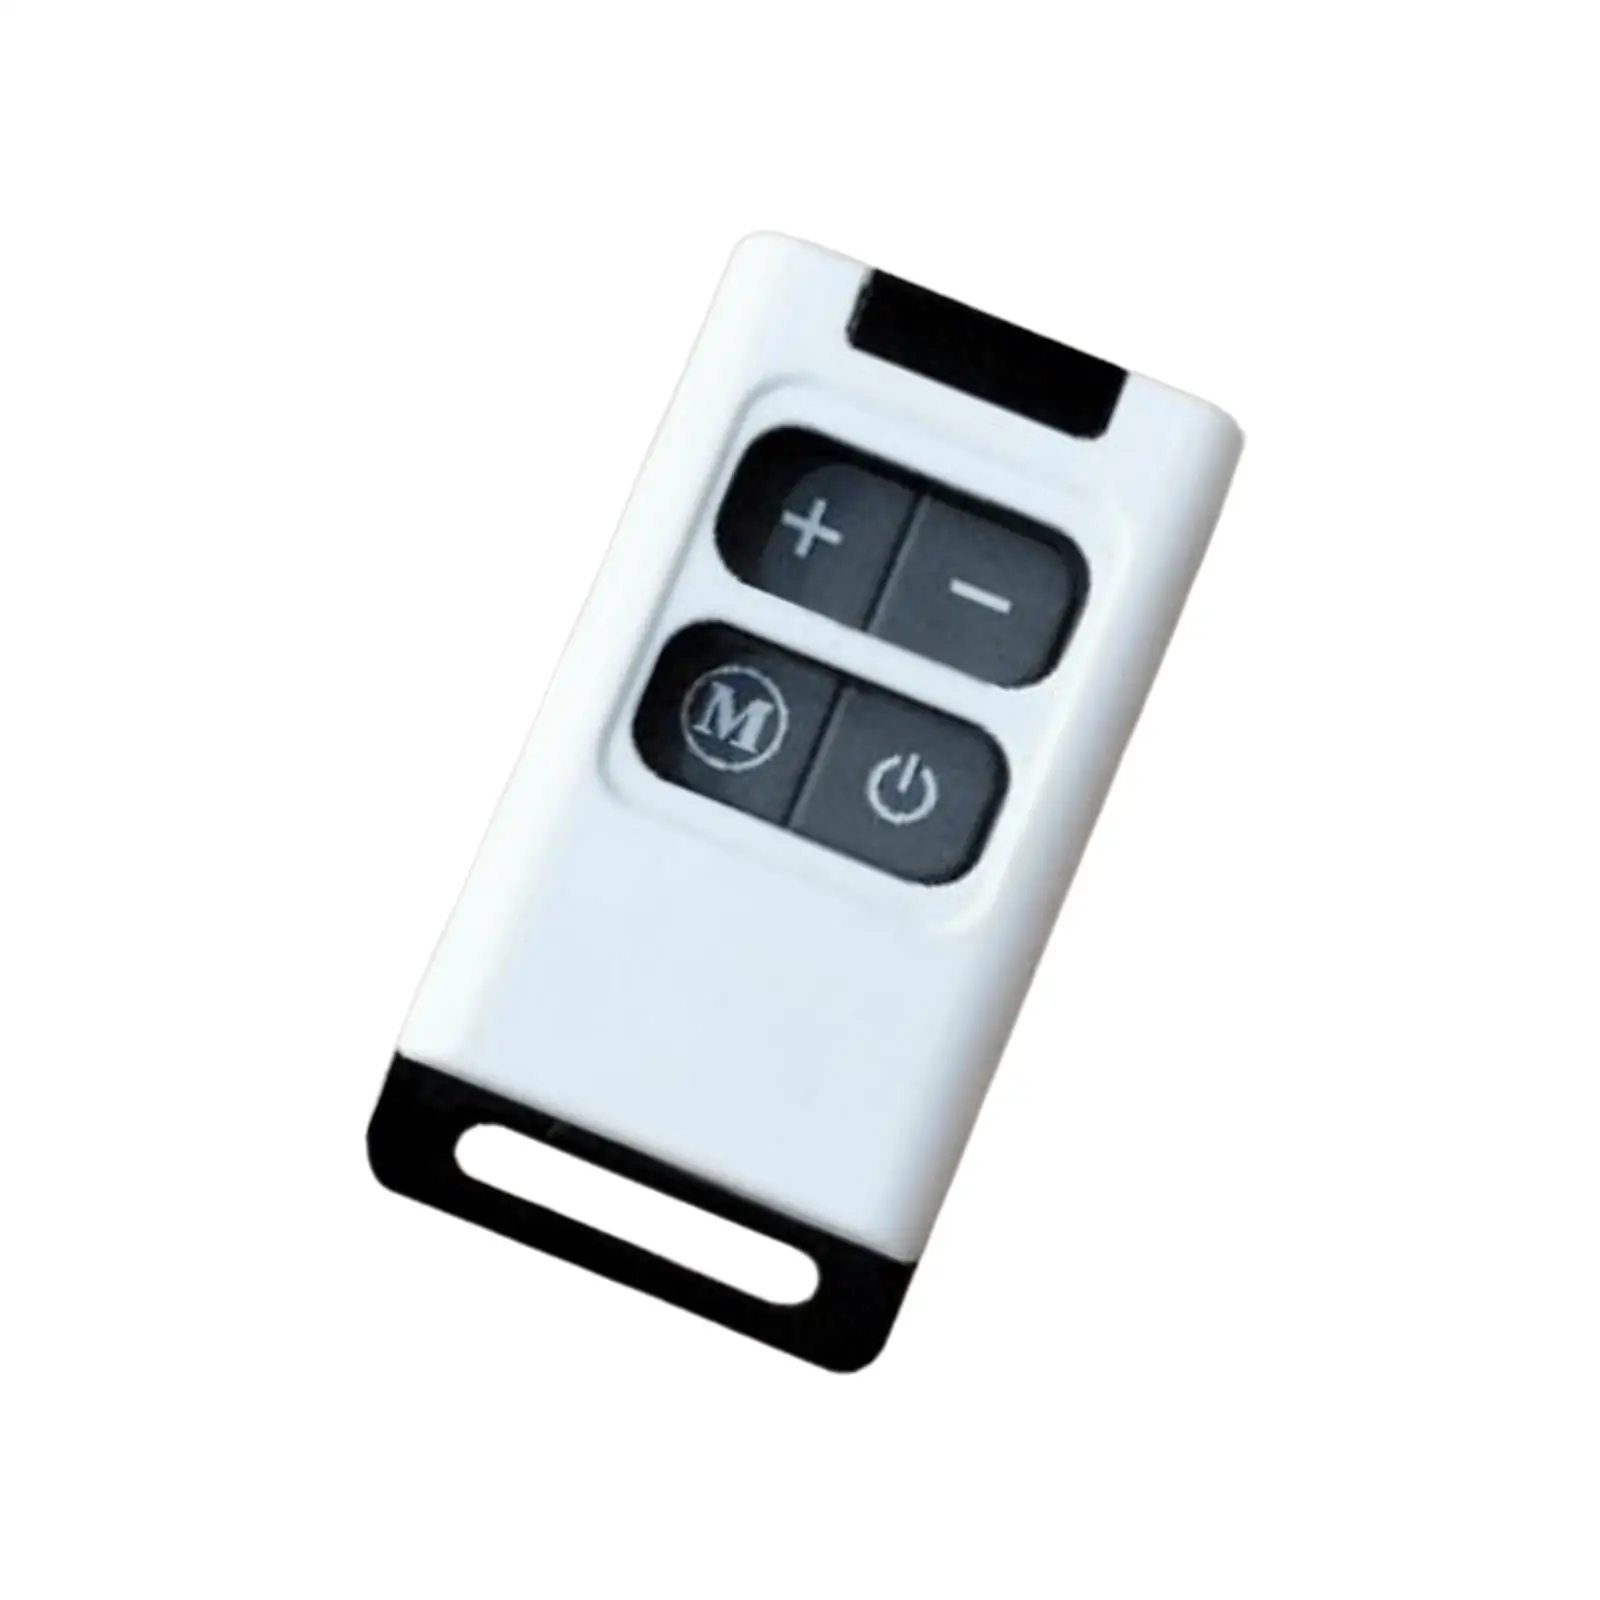 Car Parking Heater Remote Control Car Heater Controller for Heater Controller Motorhomes Vehicle Air Parking Heater Vehicle